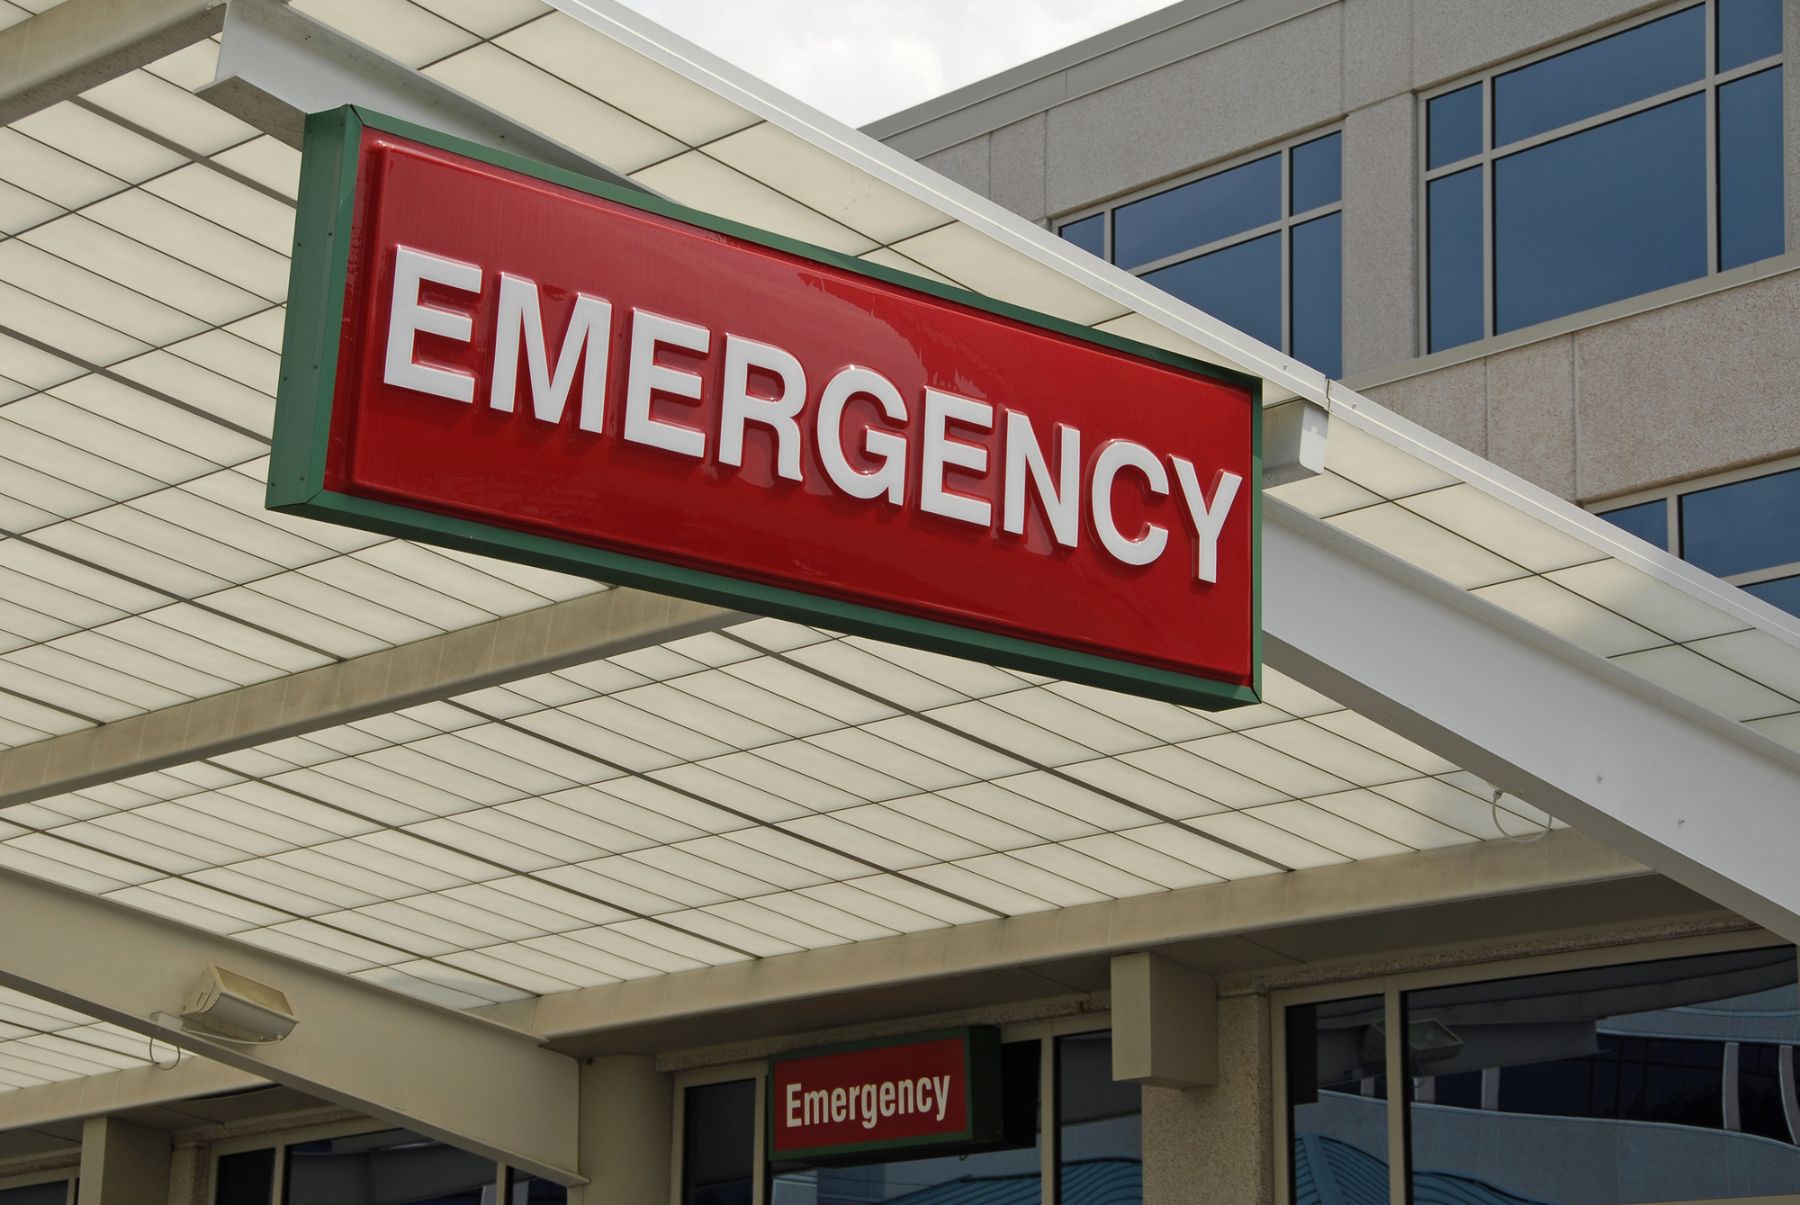 Emergency sign at hospital